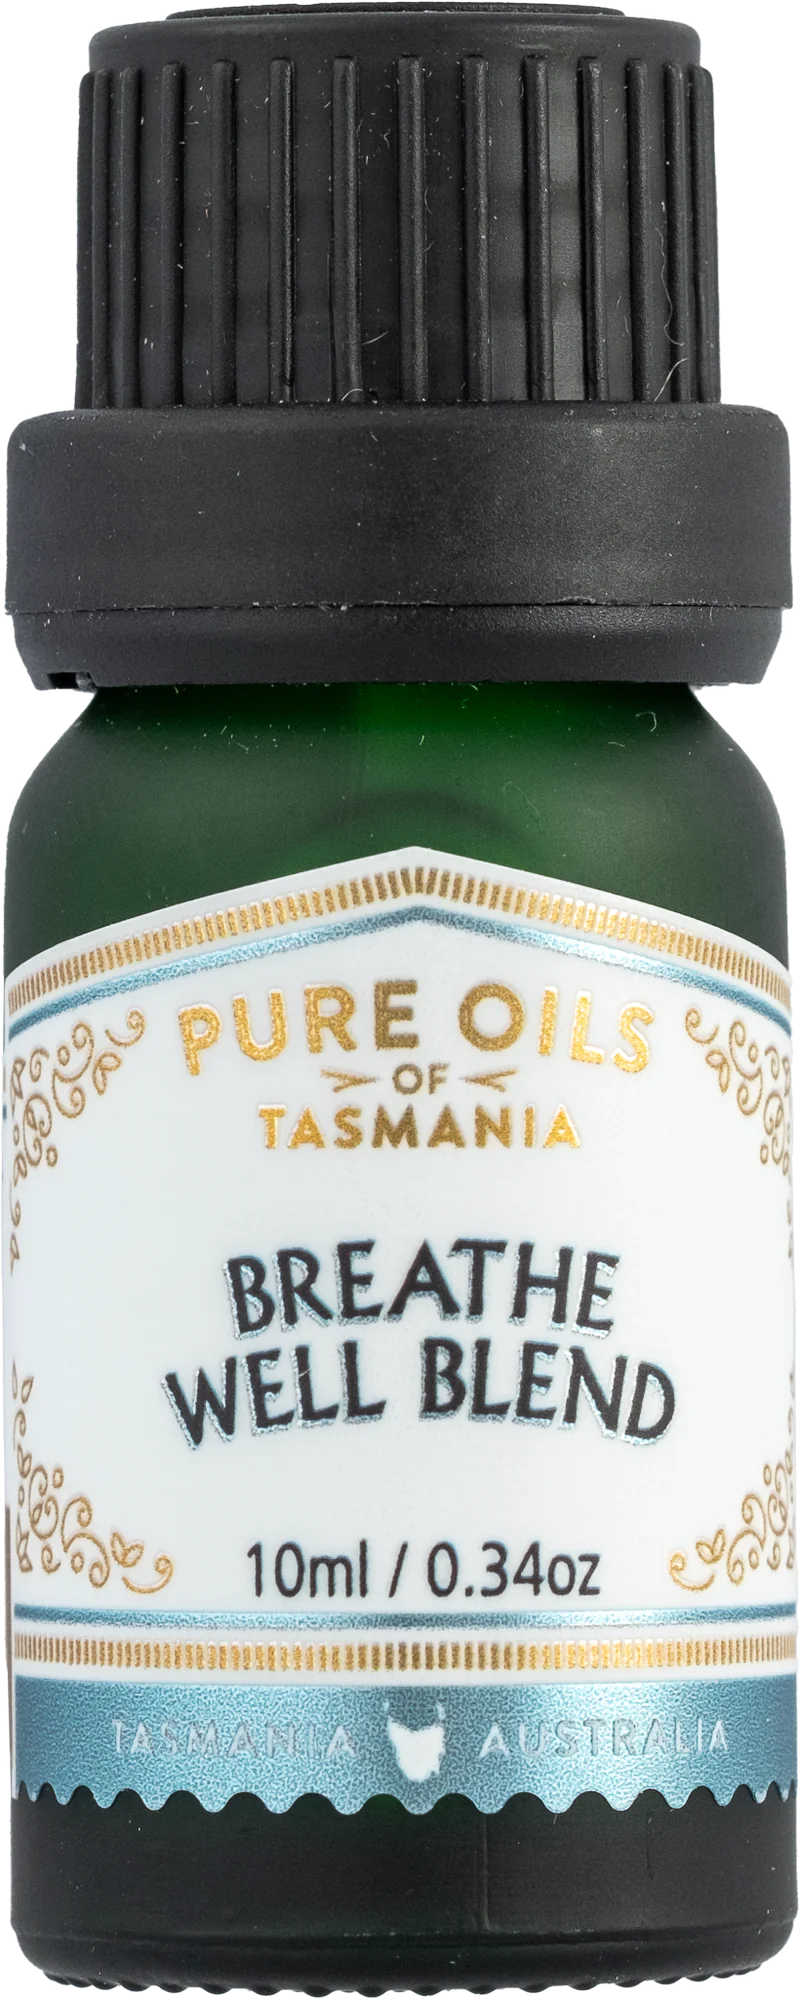 Pure Oil Blends - Pure Oils of Tasmania Body pure oils tasmania Breathe Well Blend 